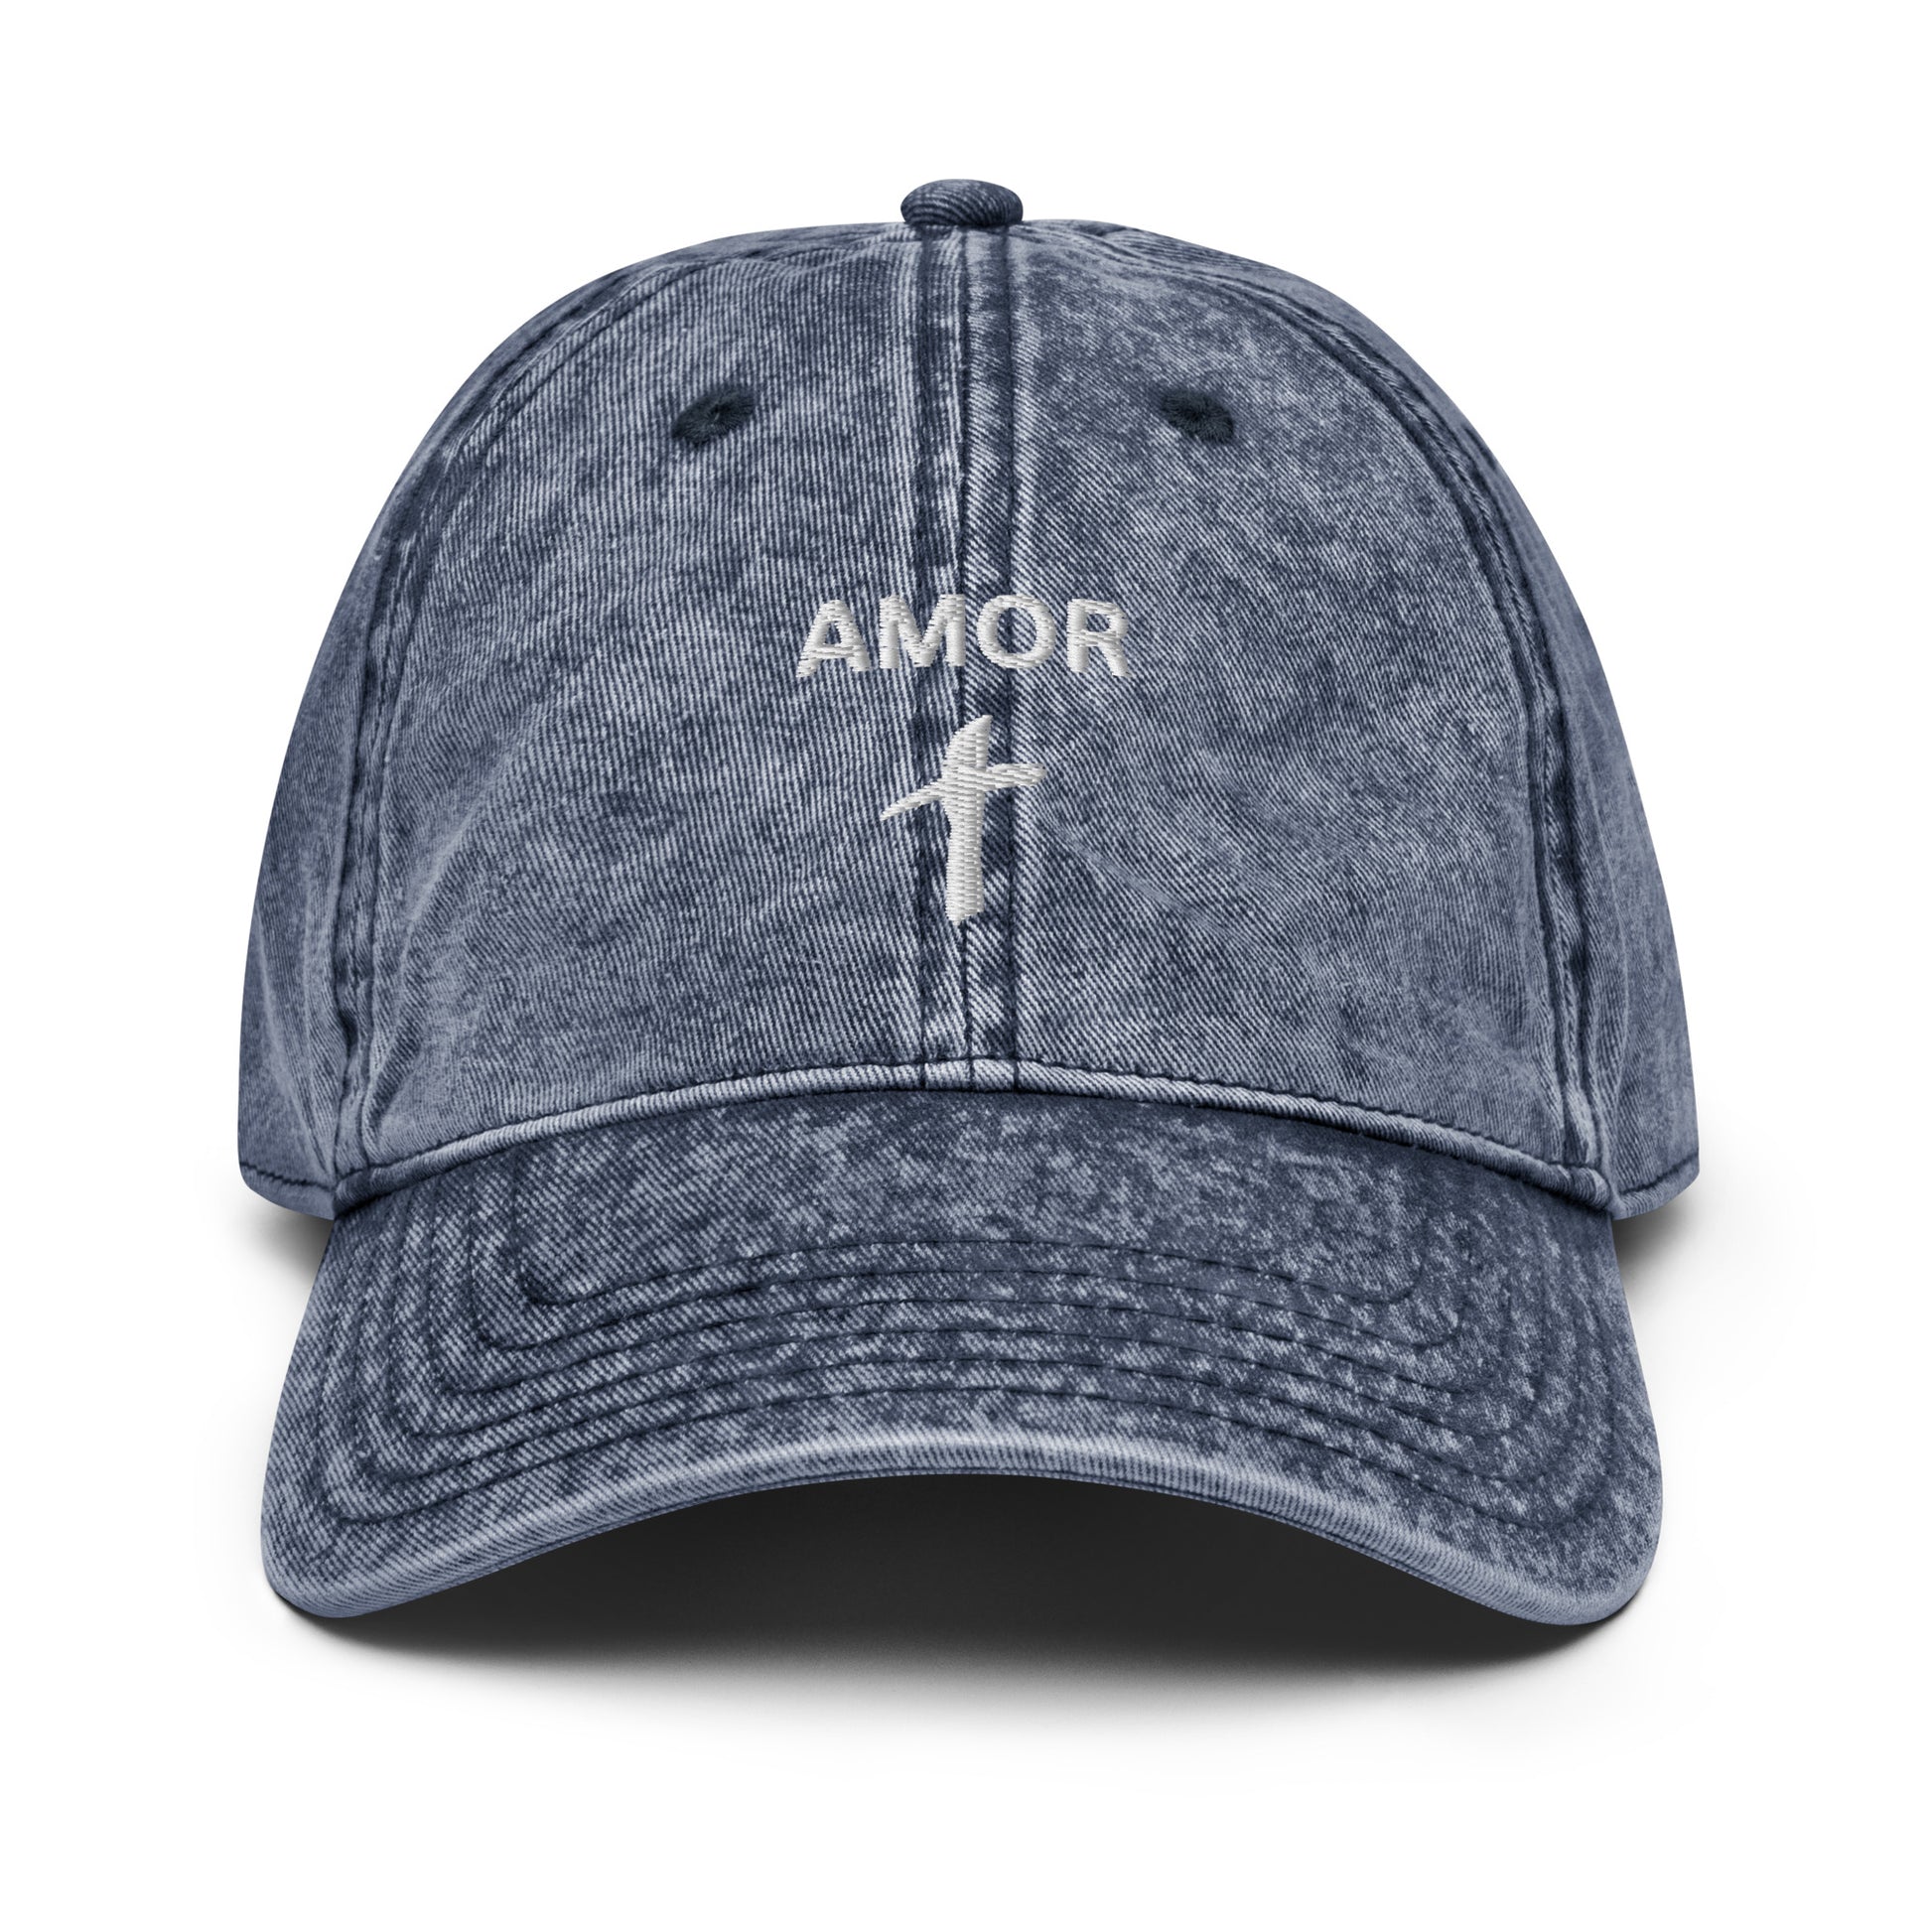 Vintage Cotton Twill "Amor" Embroidered Cap - Humble & Faithful Co.